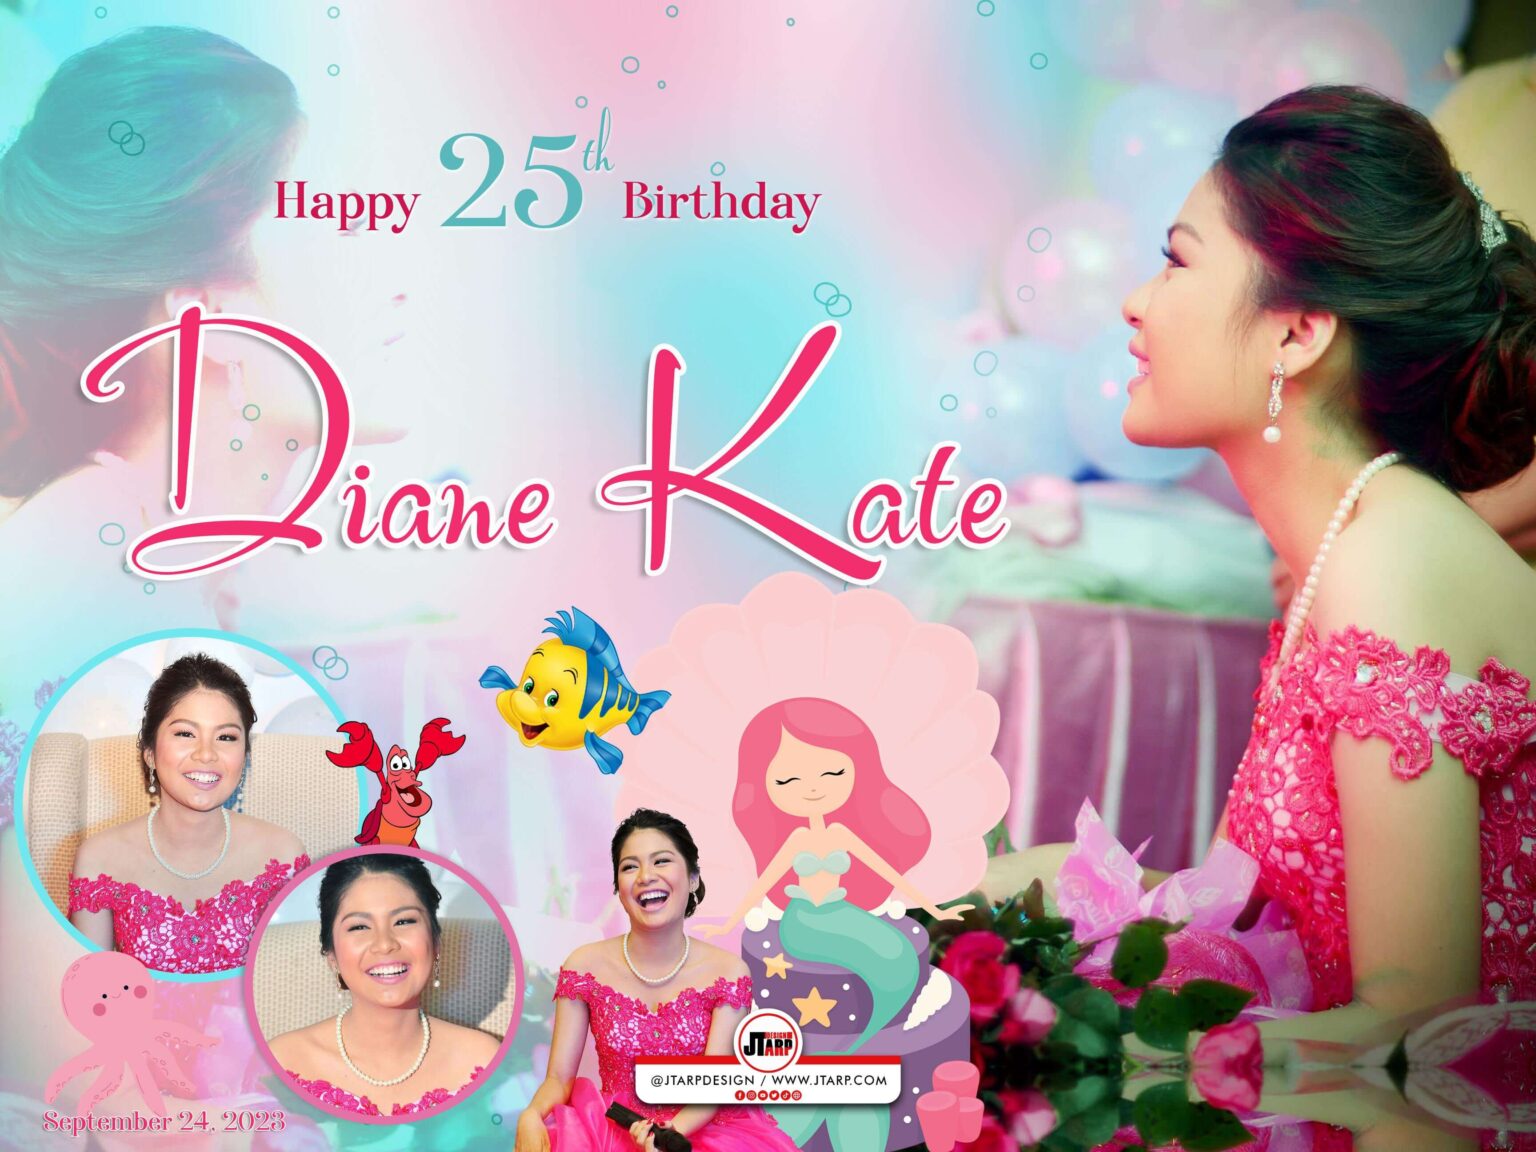 4x3 Happy 25th Birthday Diane Kate Mermaid Theme copy